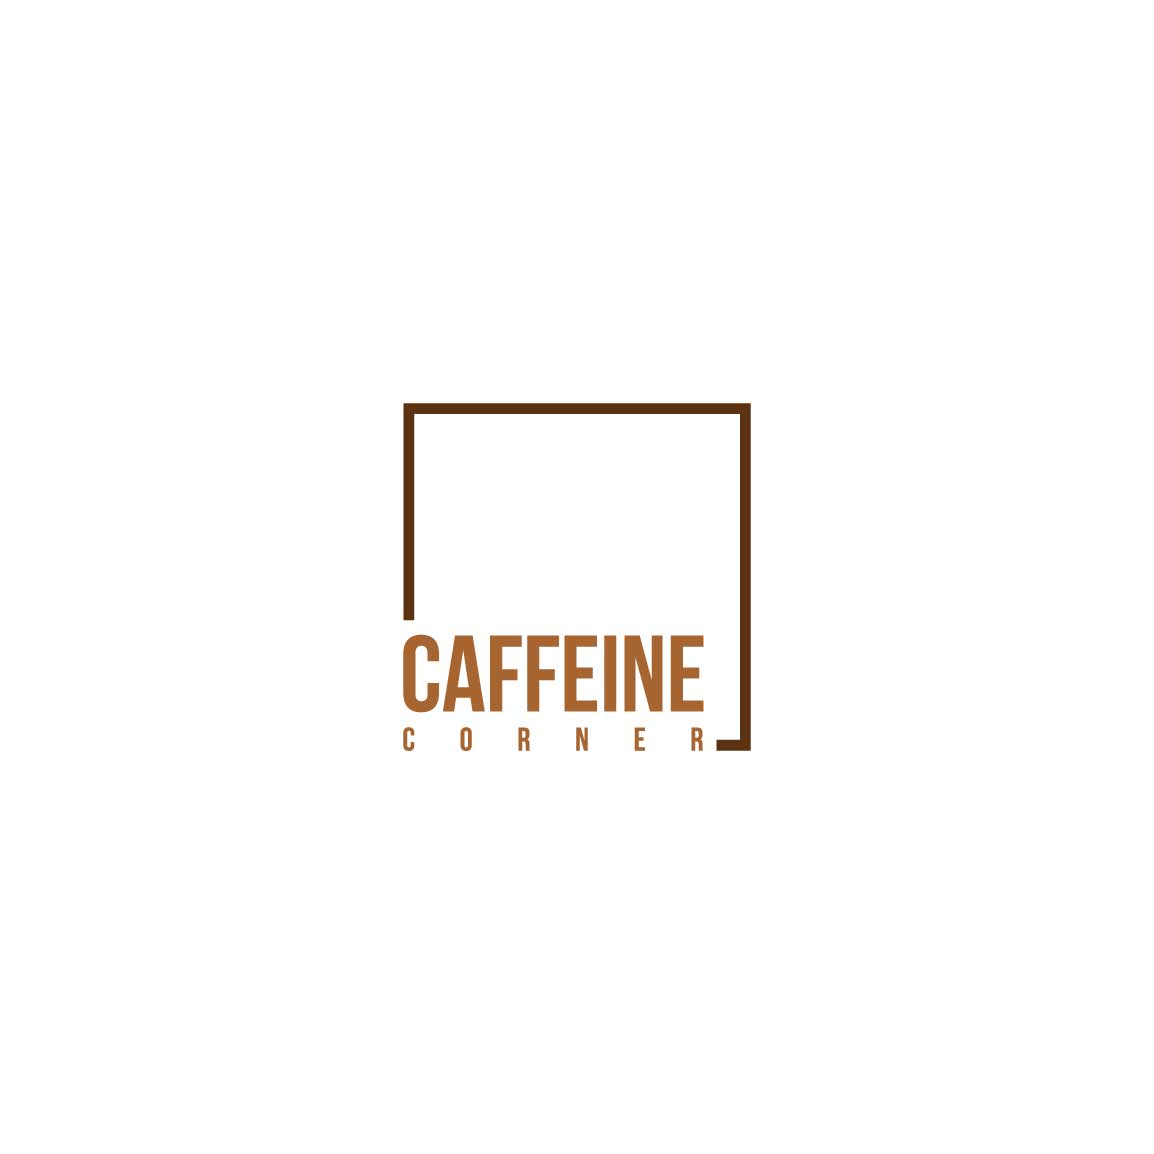 Corner Logo - Coffee Shop Logo Design for Caffeine Corner by Fanol Ademi. Design